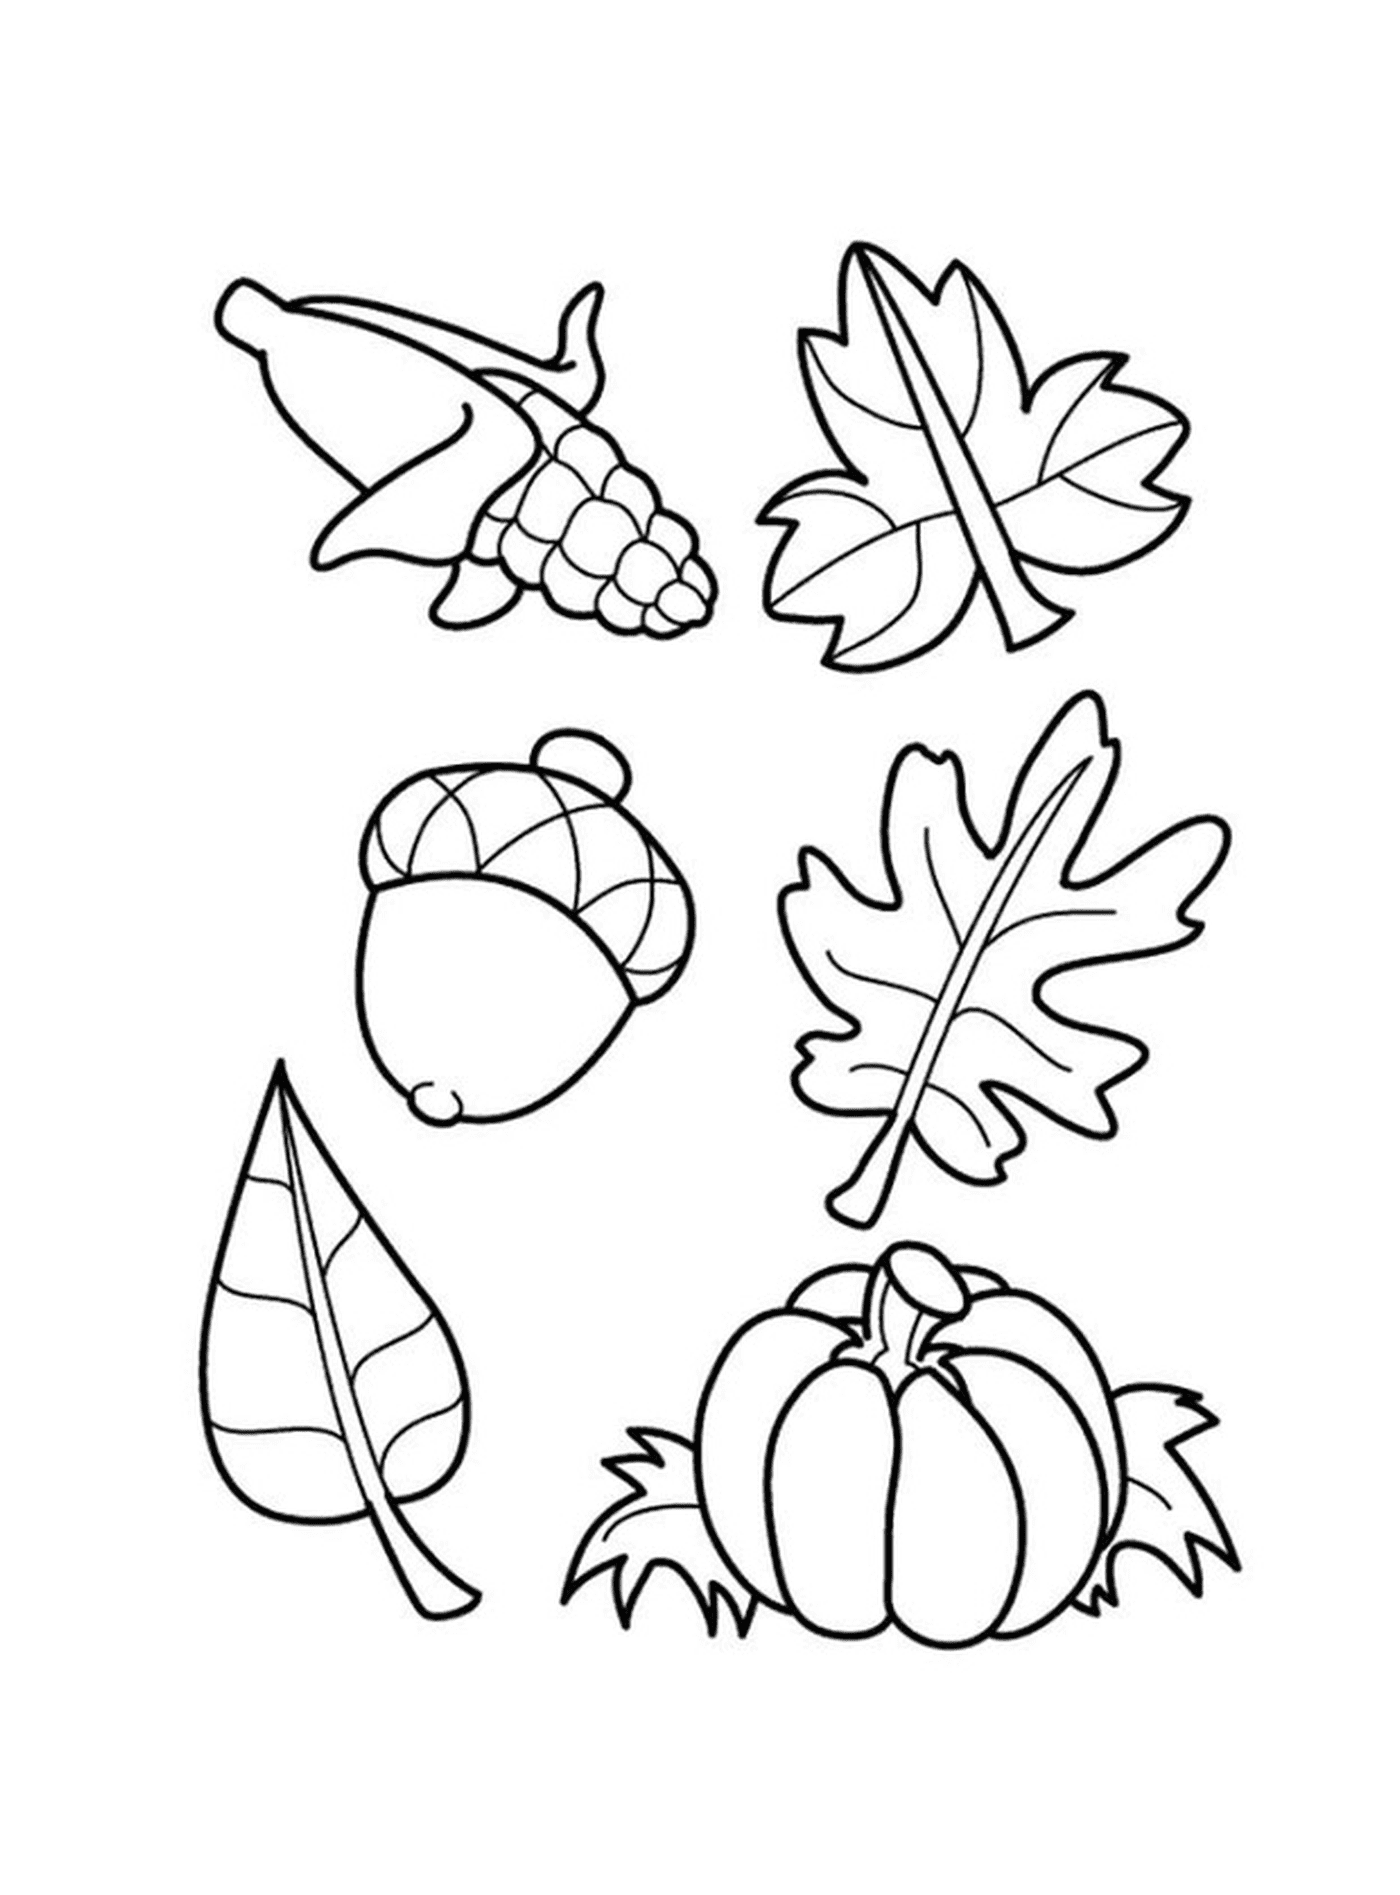  Diversi tipi di foglie autunnali 